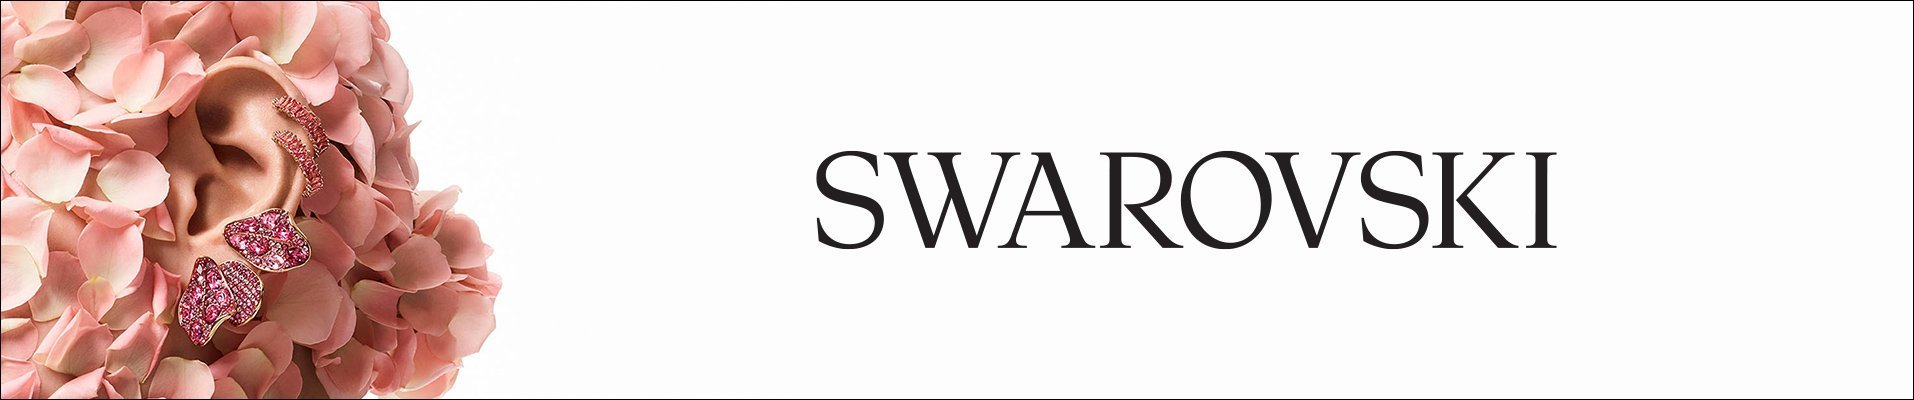 Swarovski-Savoir-faire